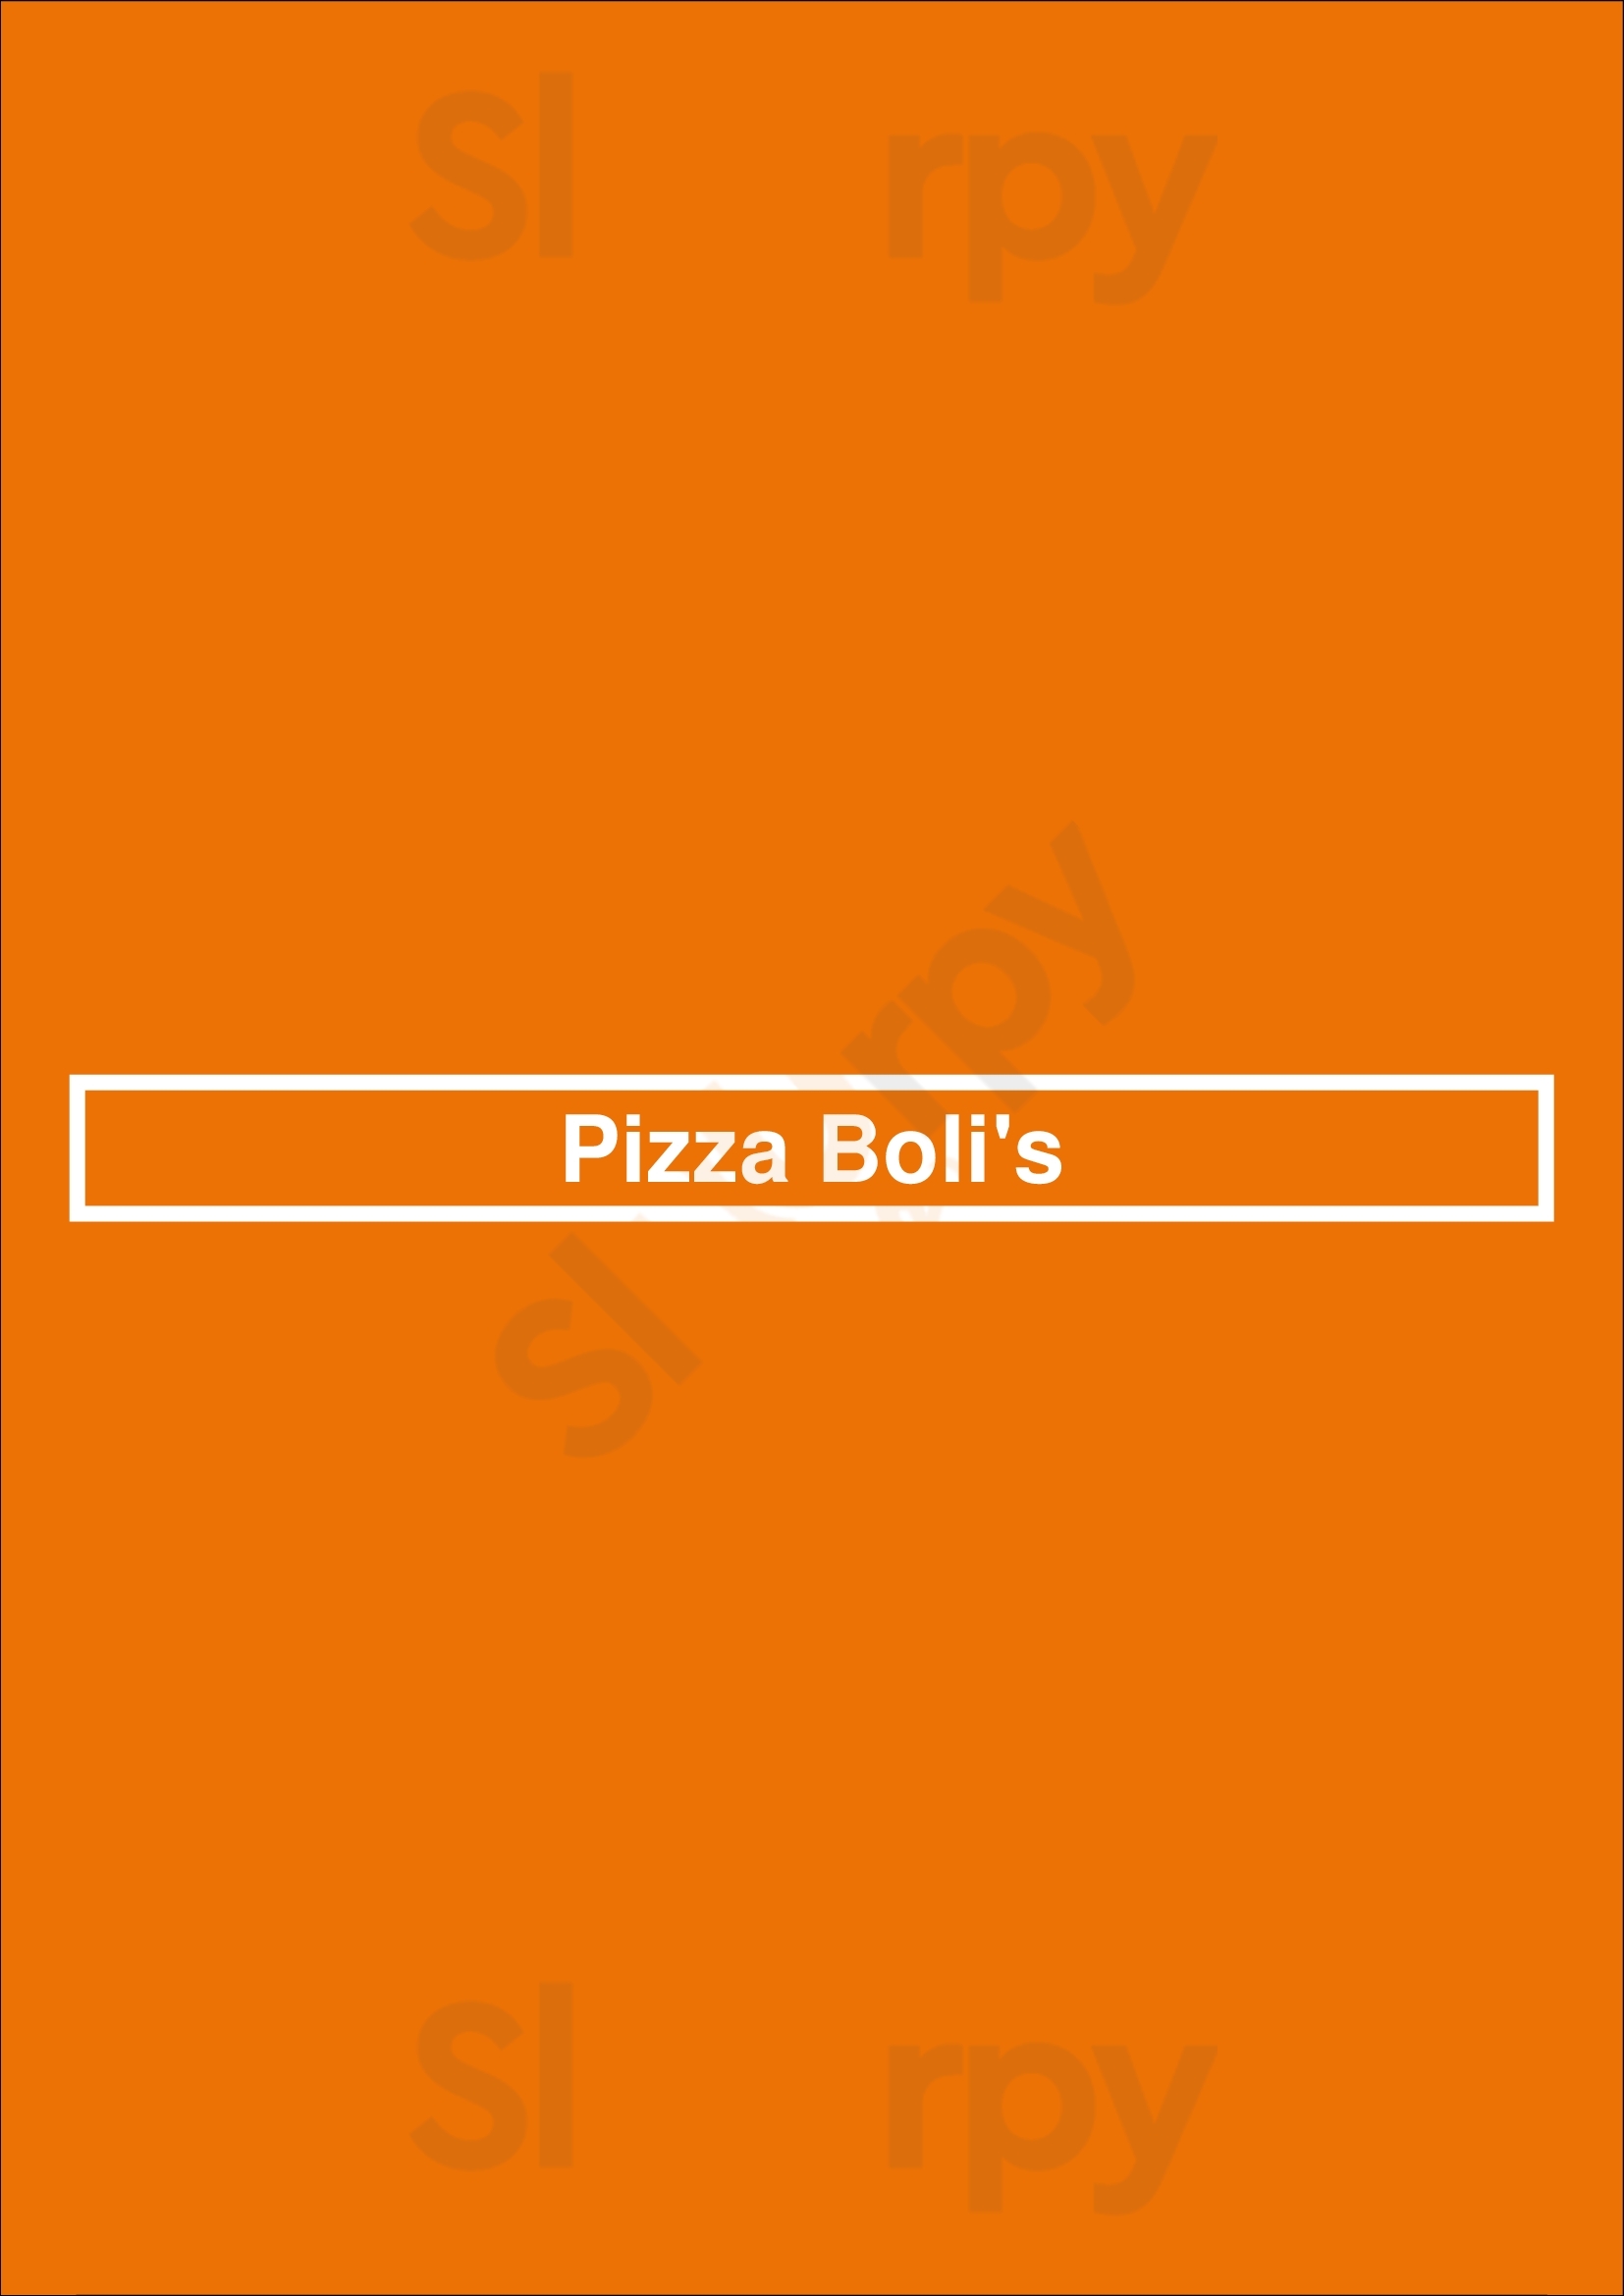 Pizza Boli's Washington DC Menu - 1